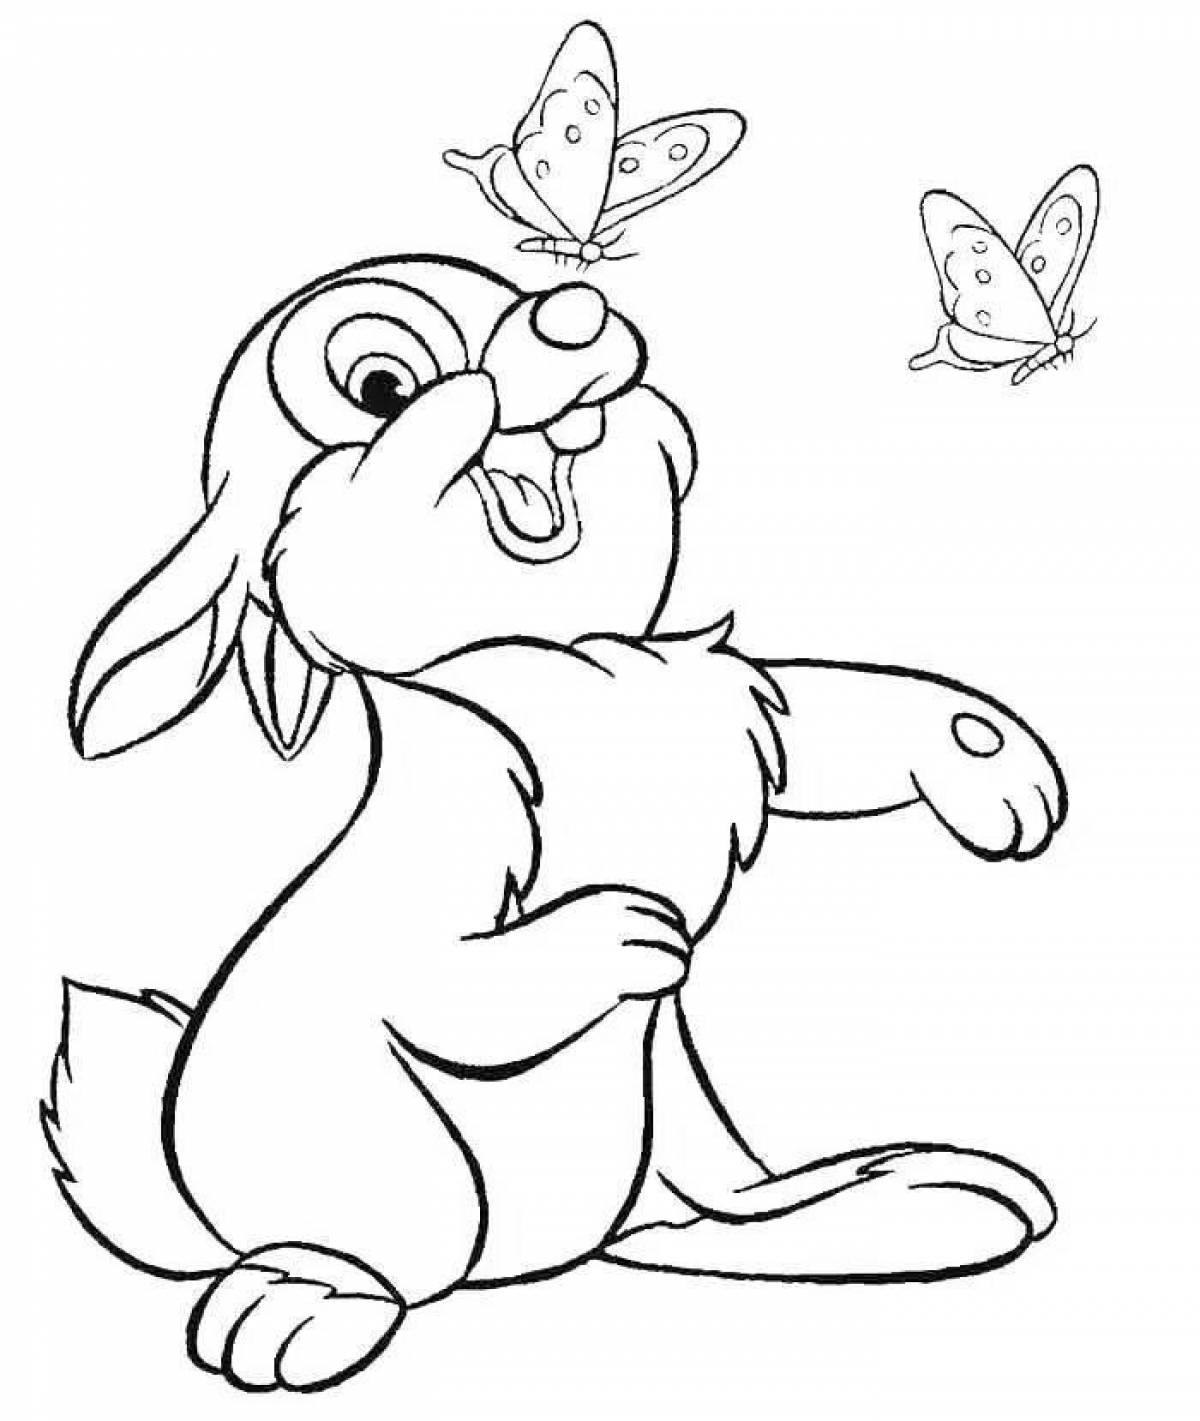 Рисунок веселого зайца